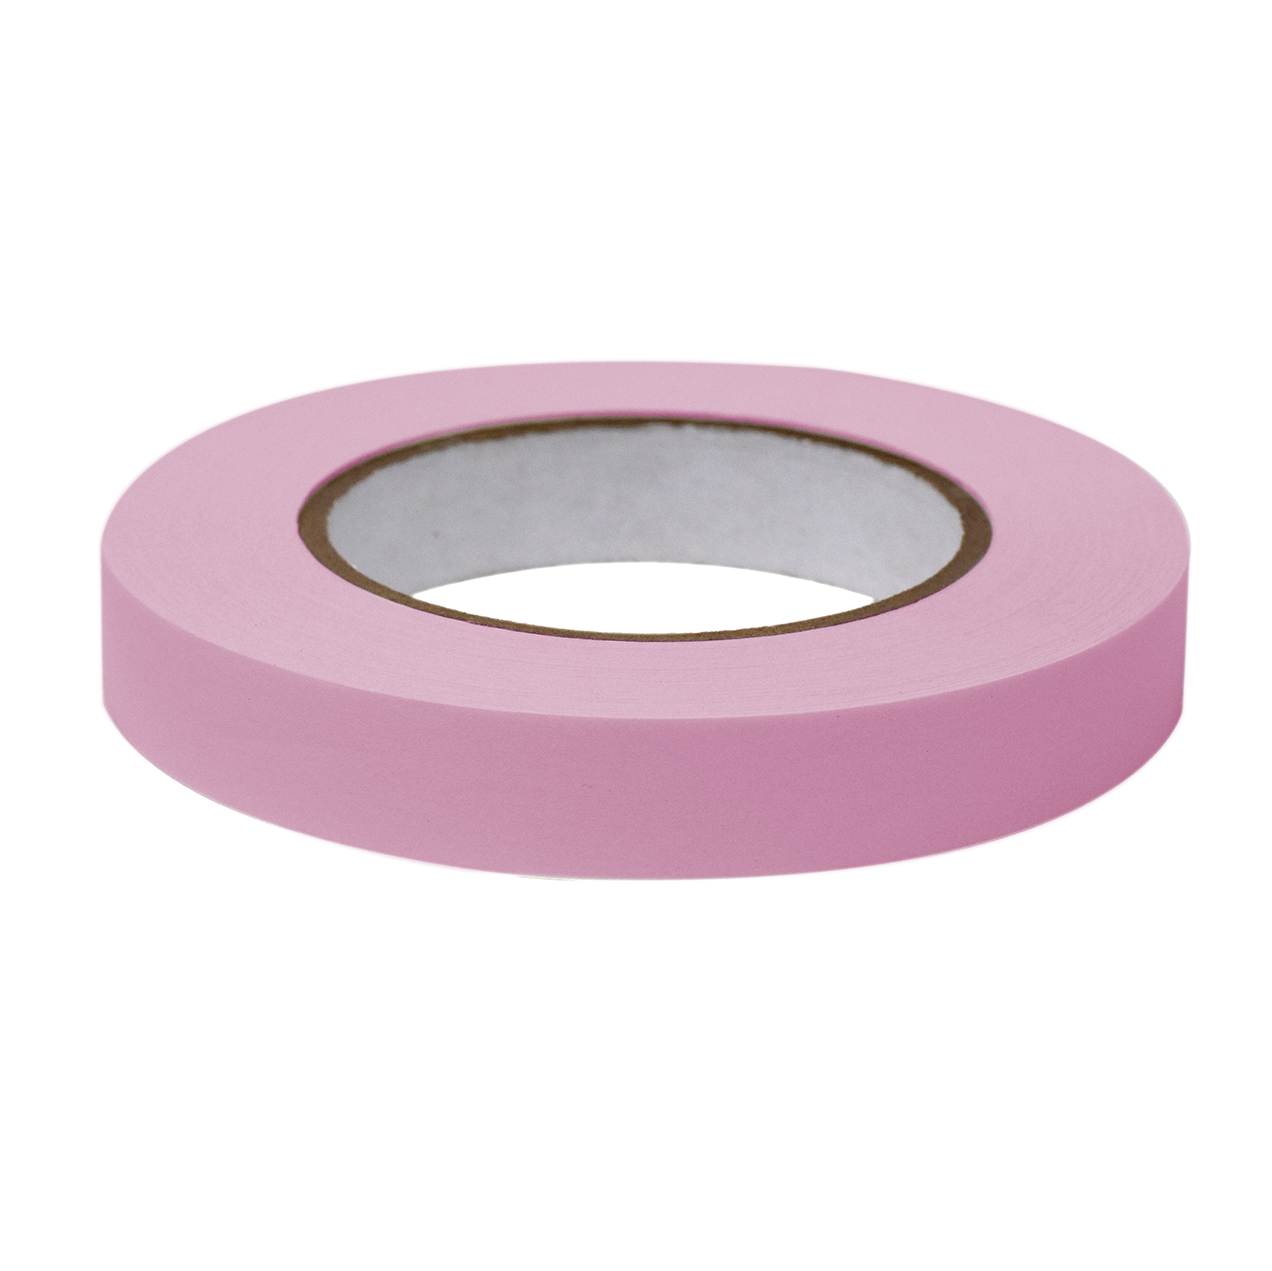 Globe Scientific Labeling Tape, 3/4" x 60yd per Roll, 4 Rolls/Case, Pink  